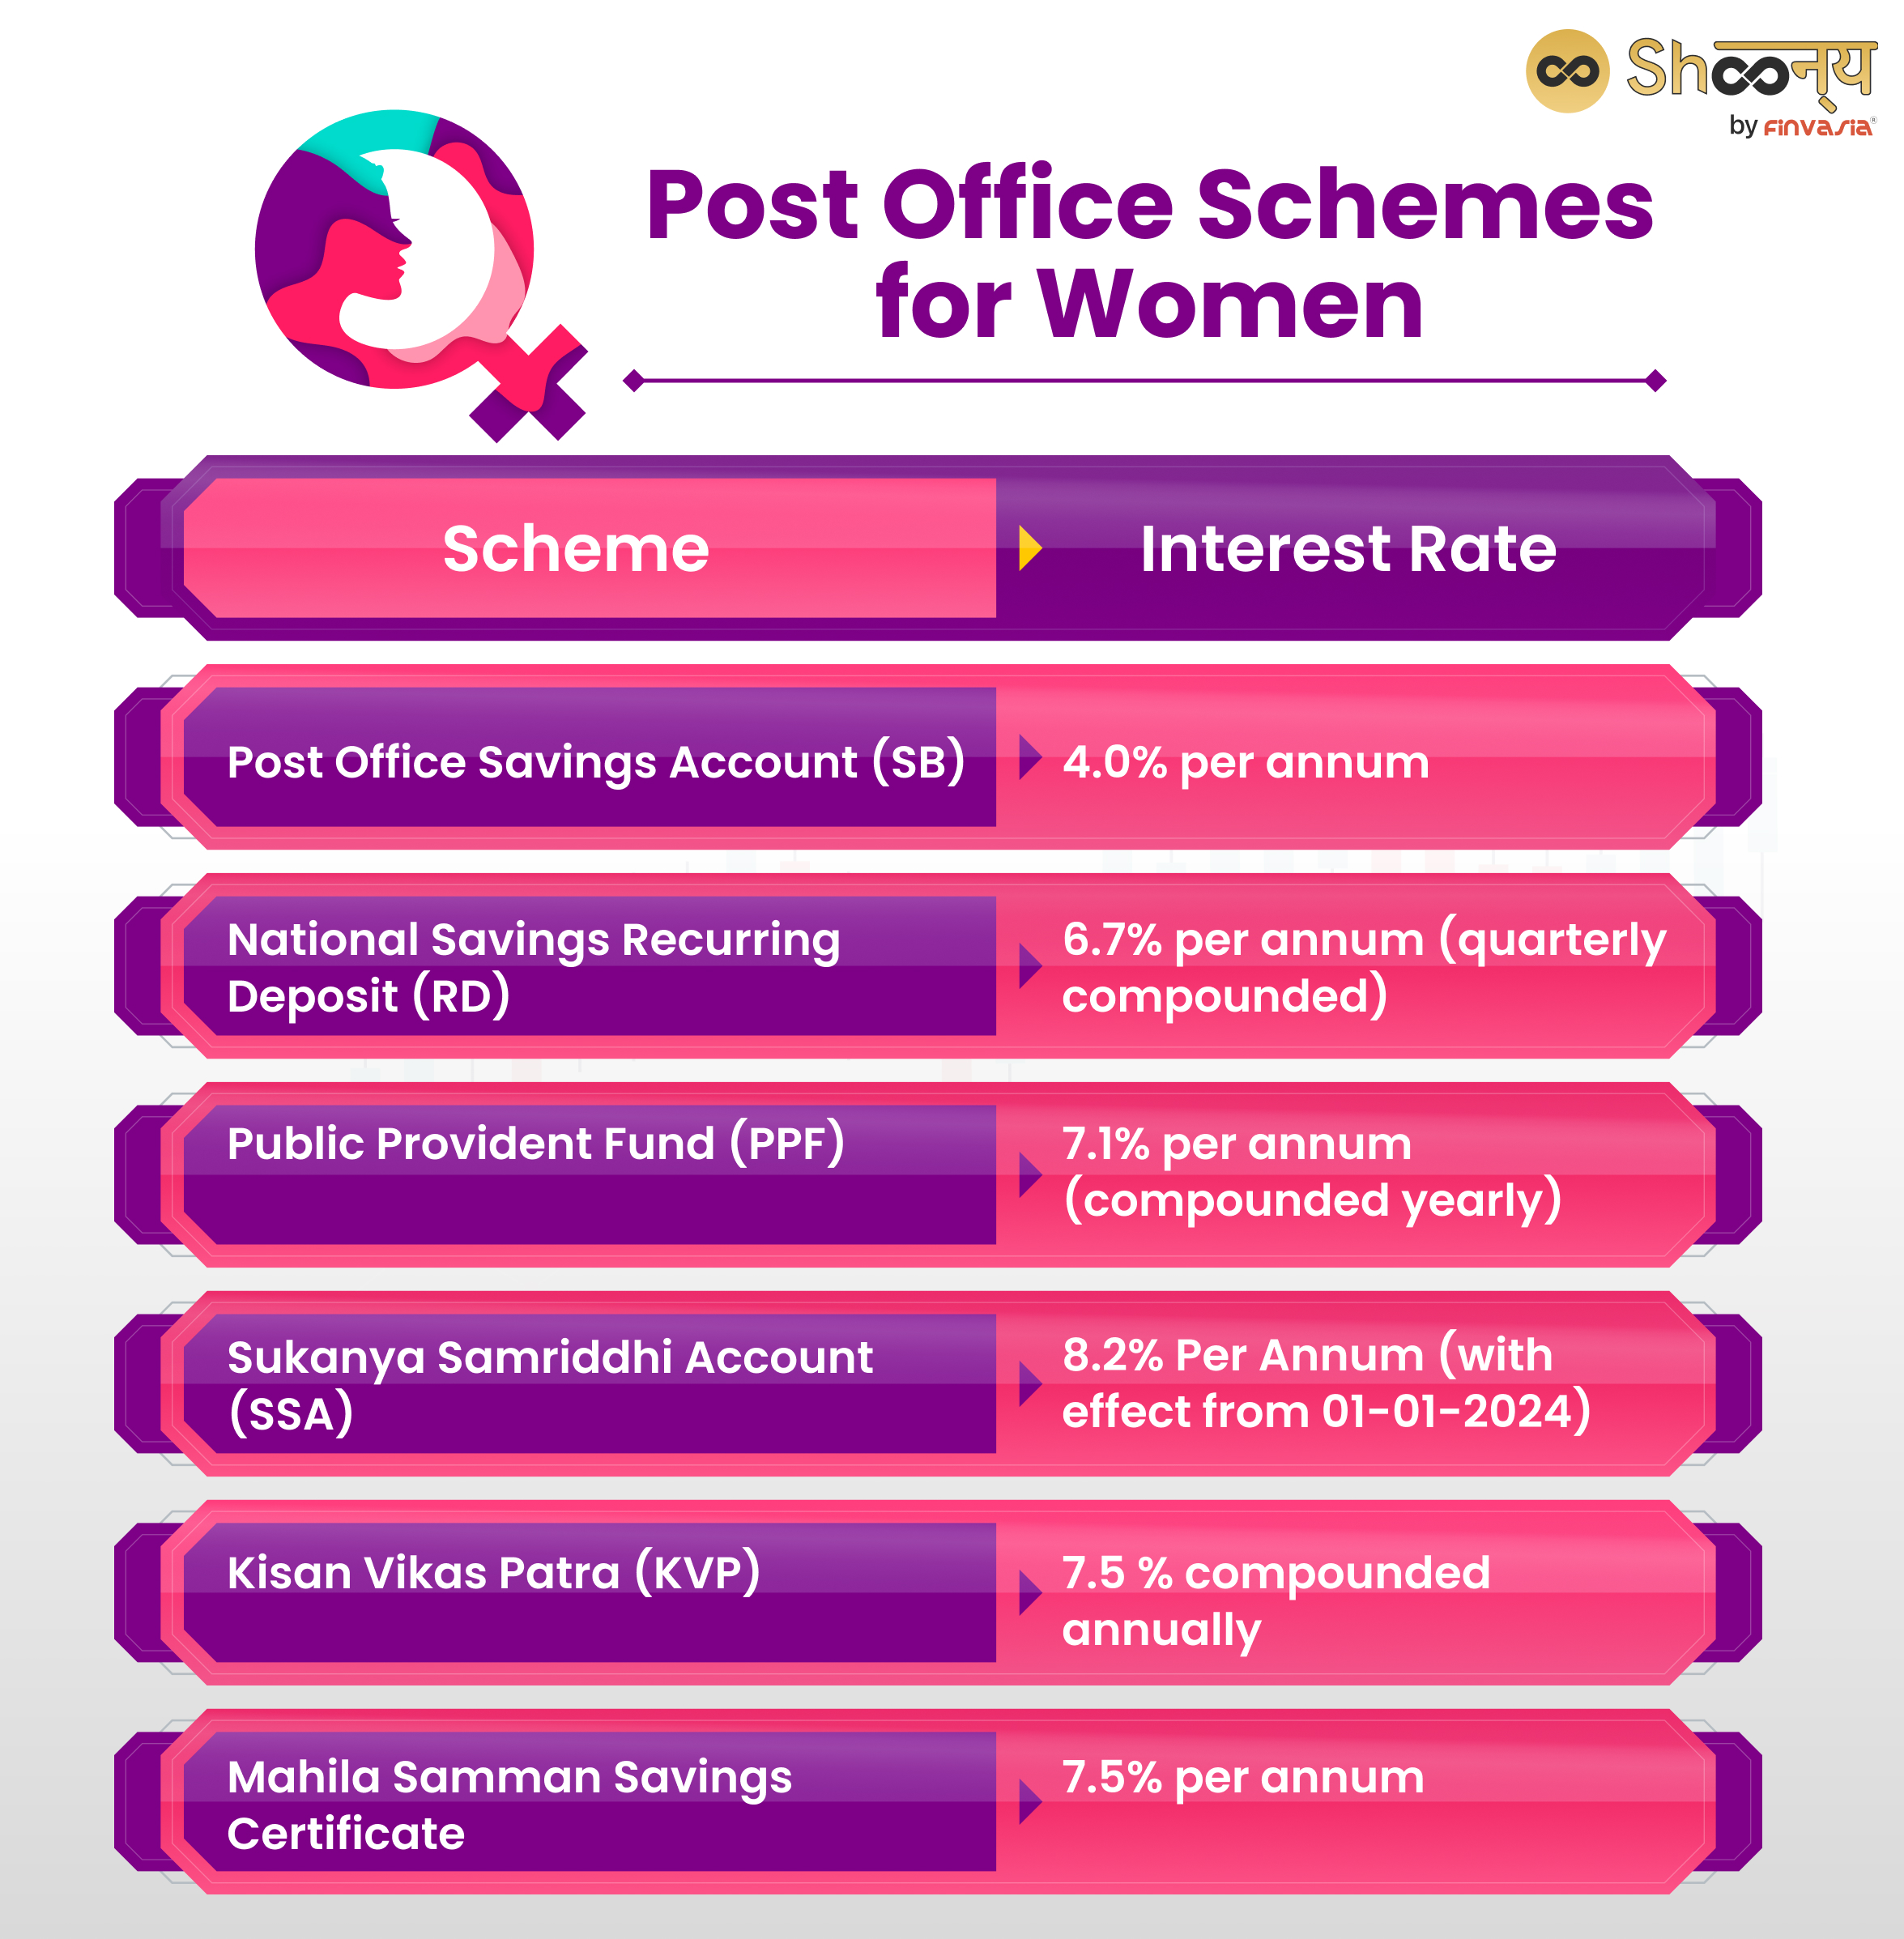 Post Office Schemes for Women